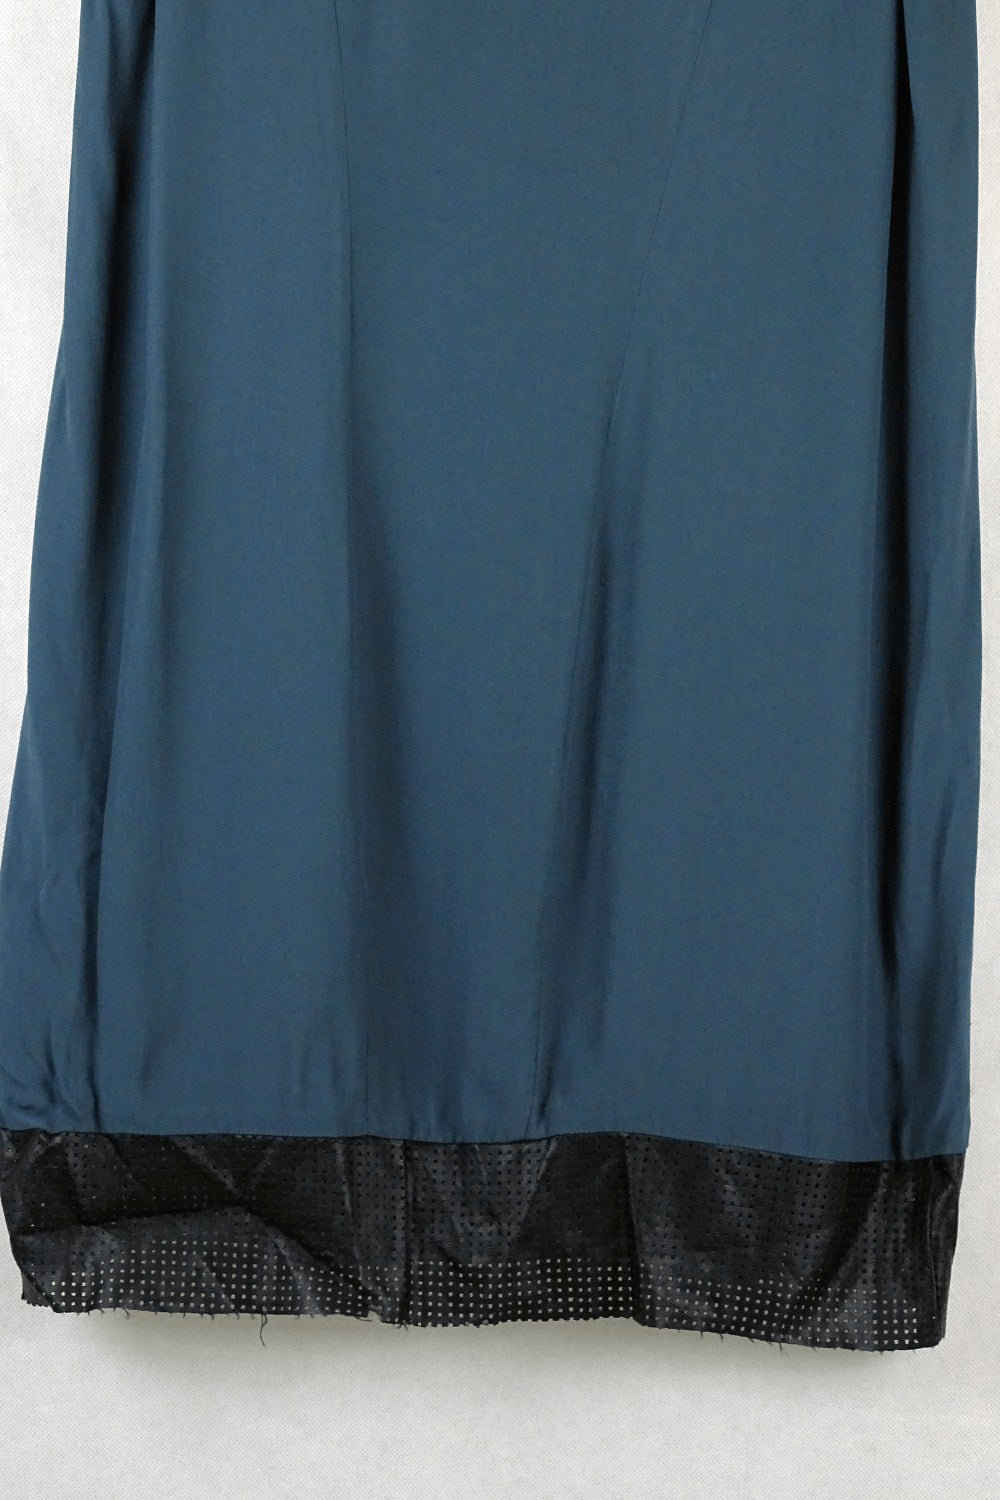 Ping Pong Grey Sleeveless Dress With Black Trim 14